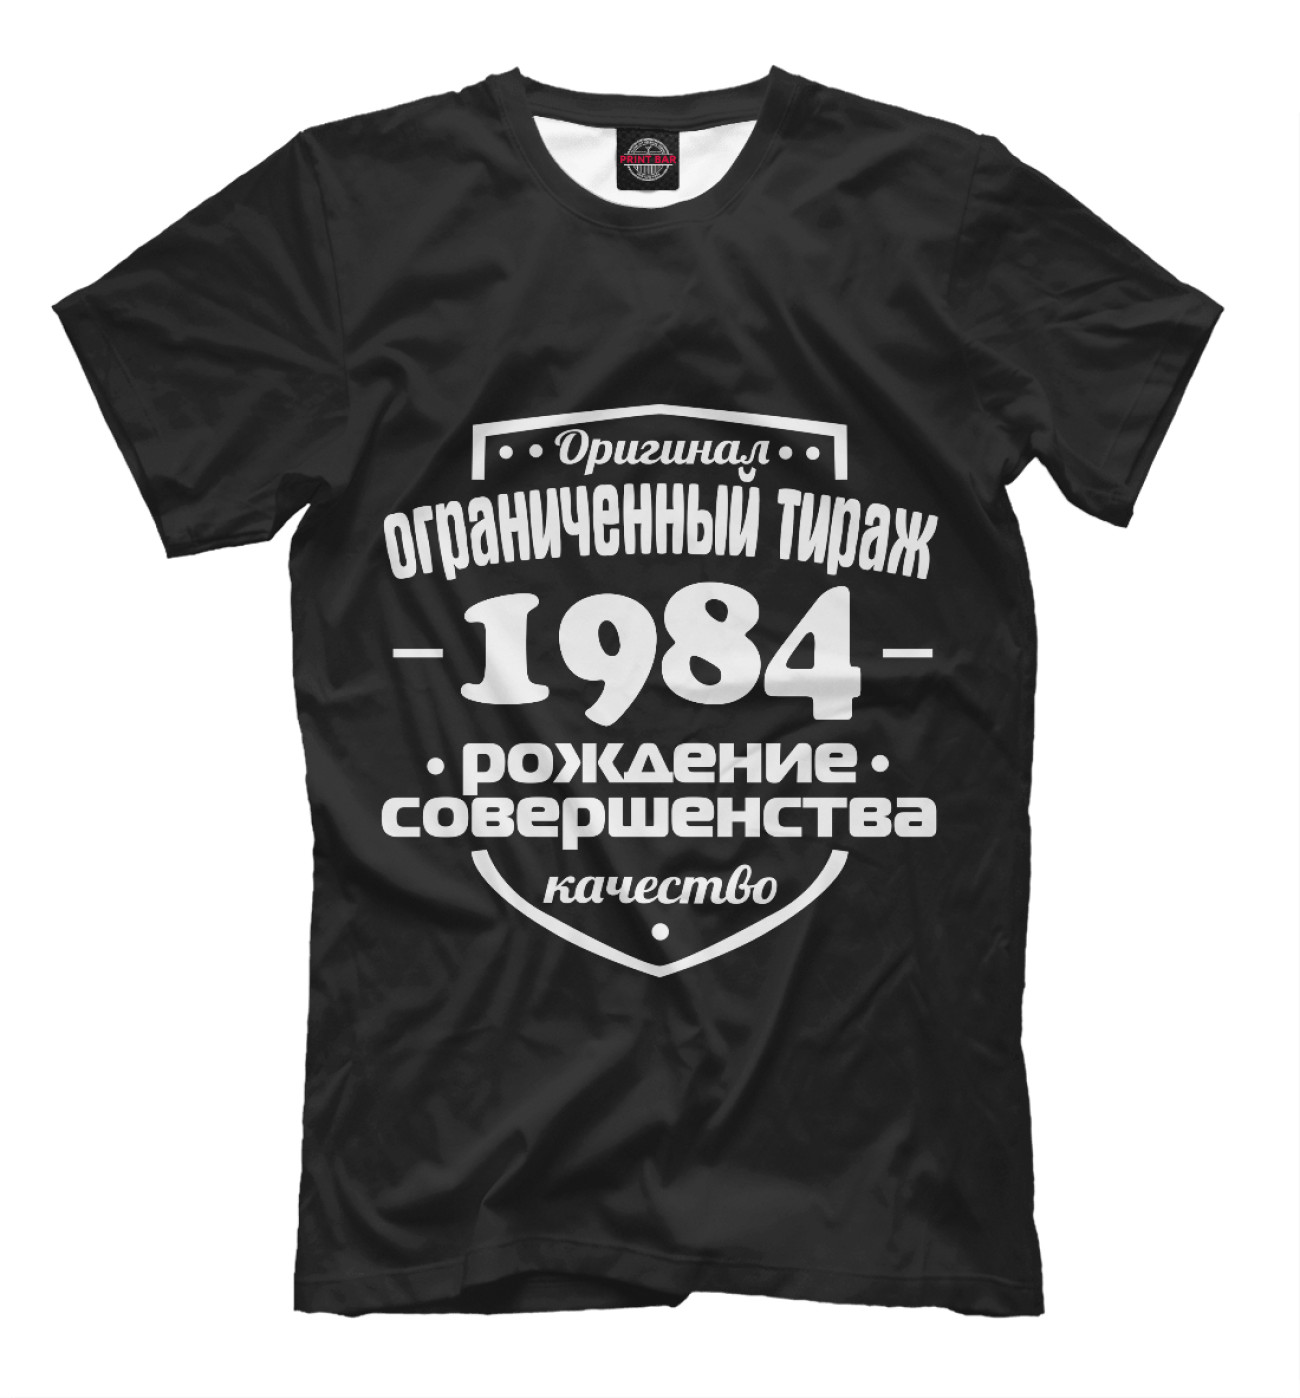 Мужская Футболка Рождение совершенства 1984, артикул: DVC-517109-fut-2